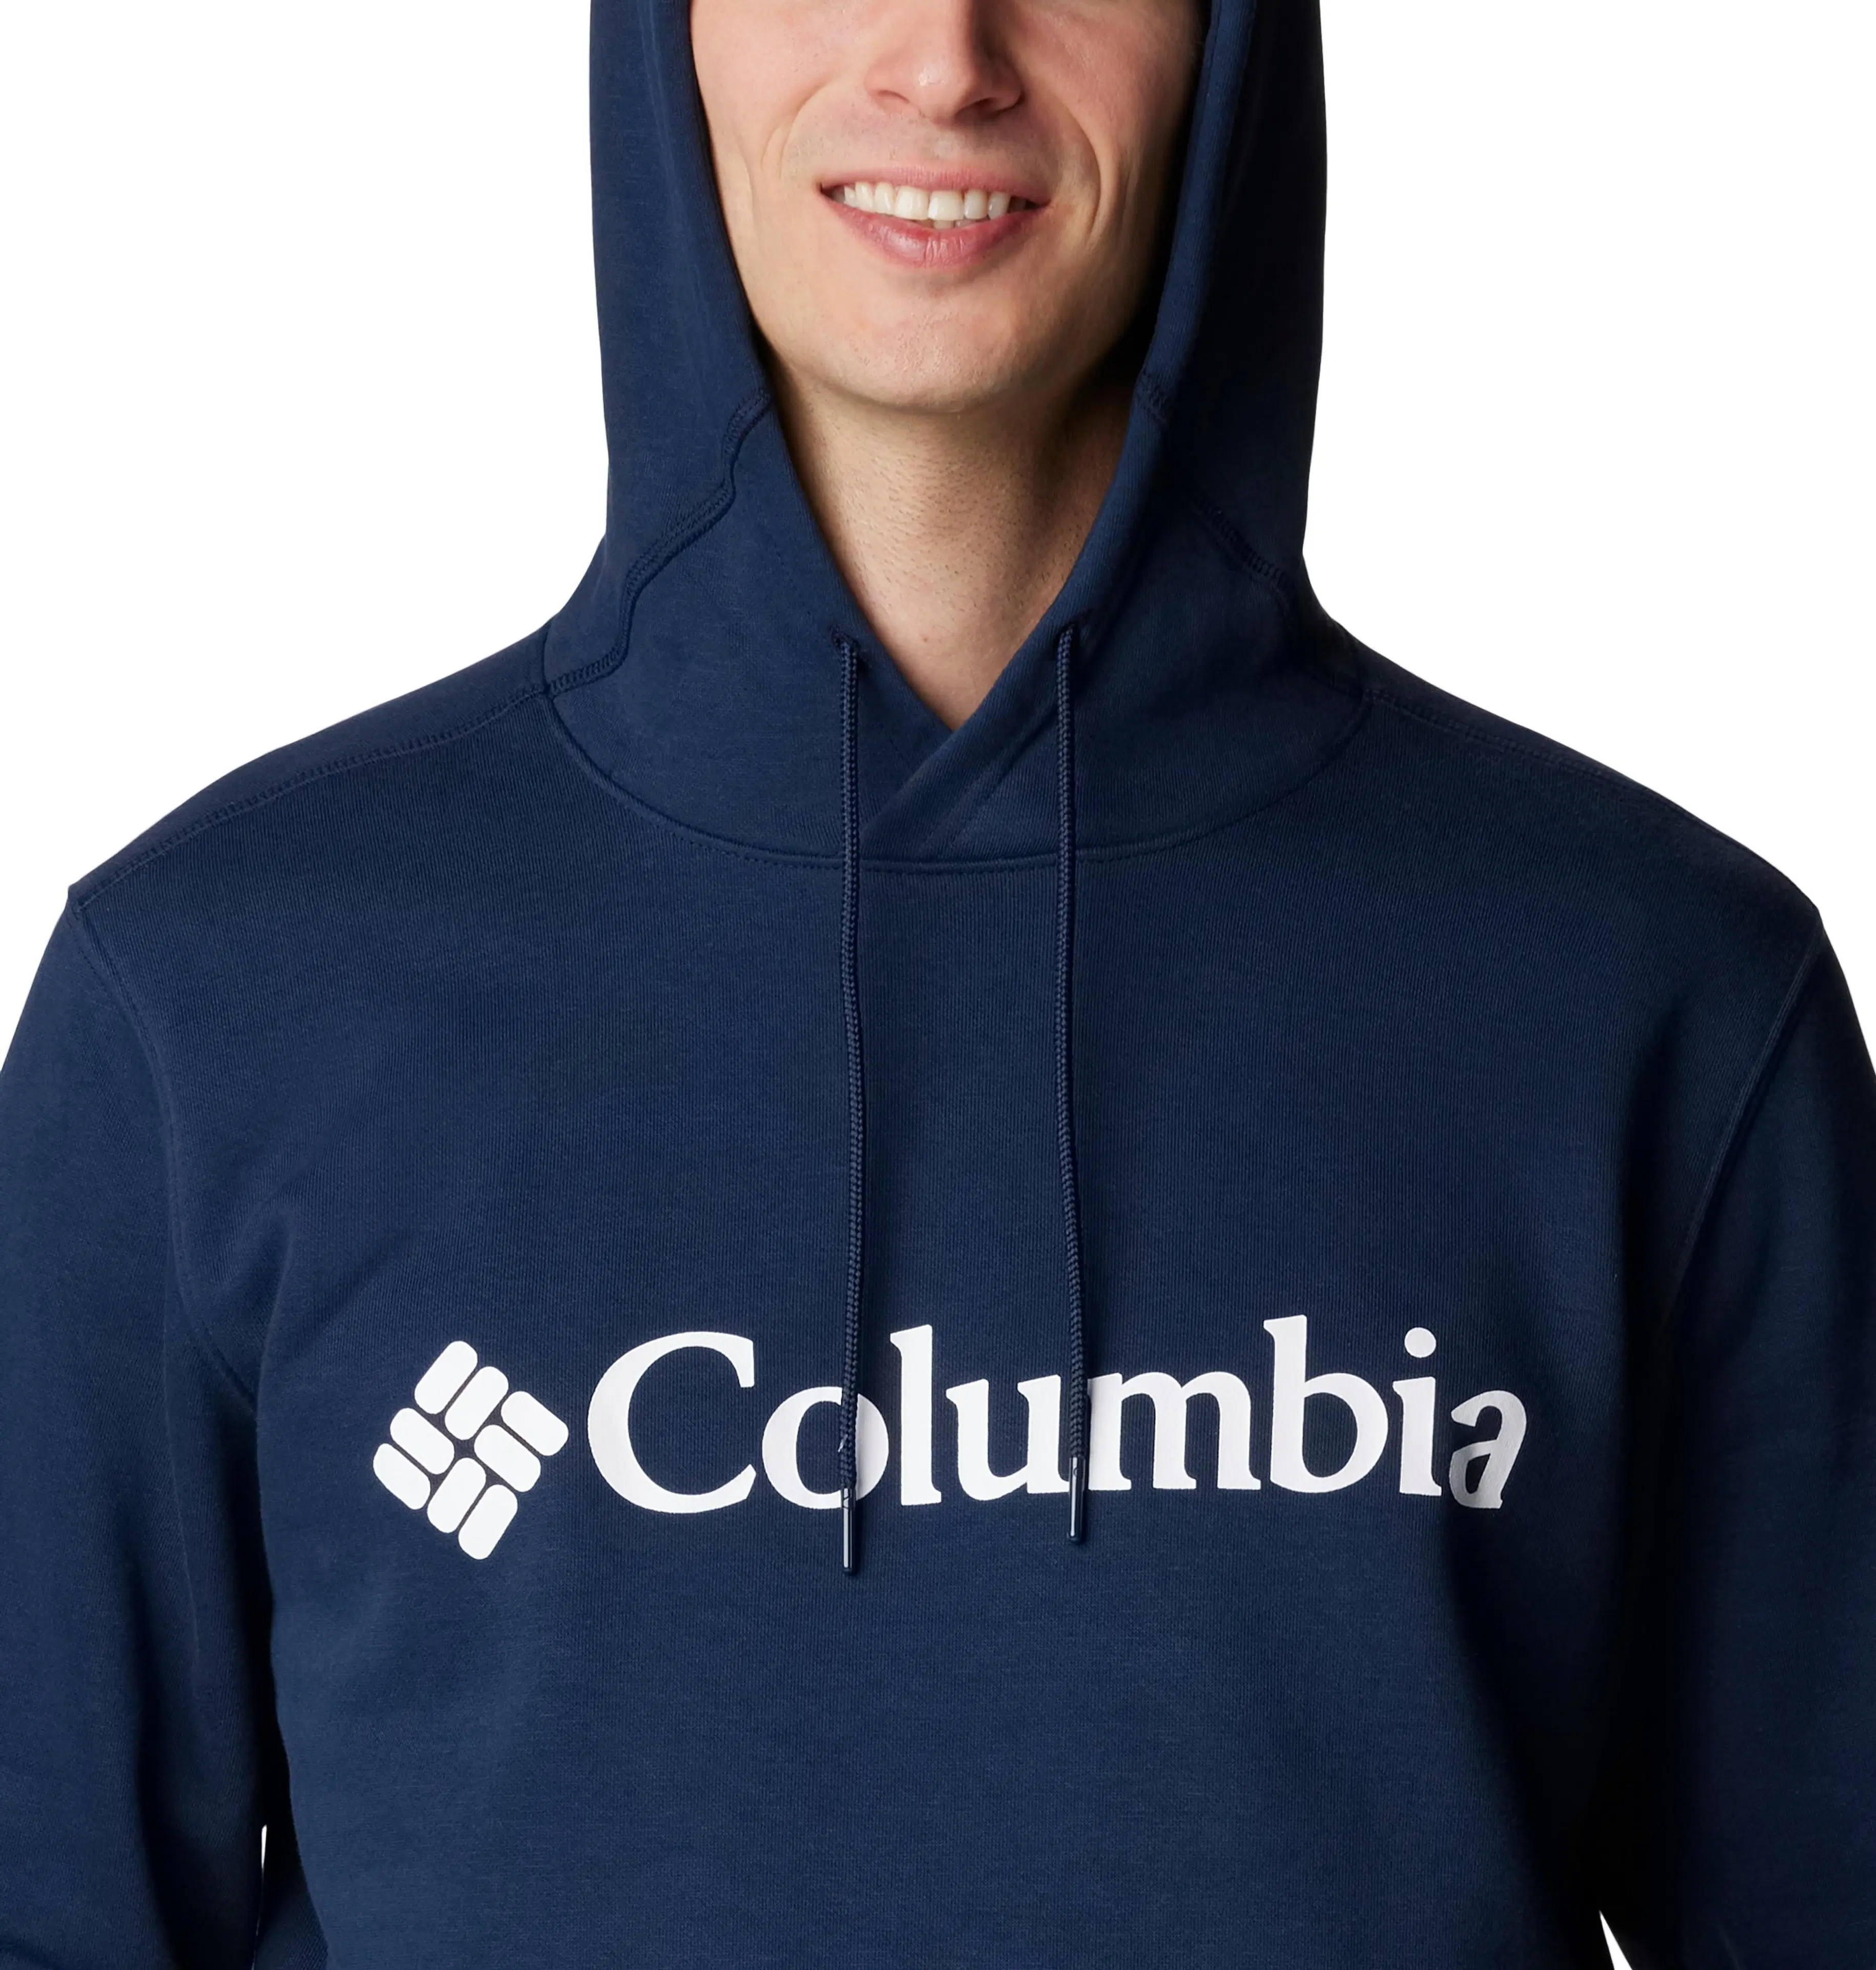 Columbia huppari basic logo